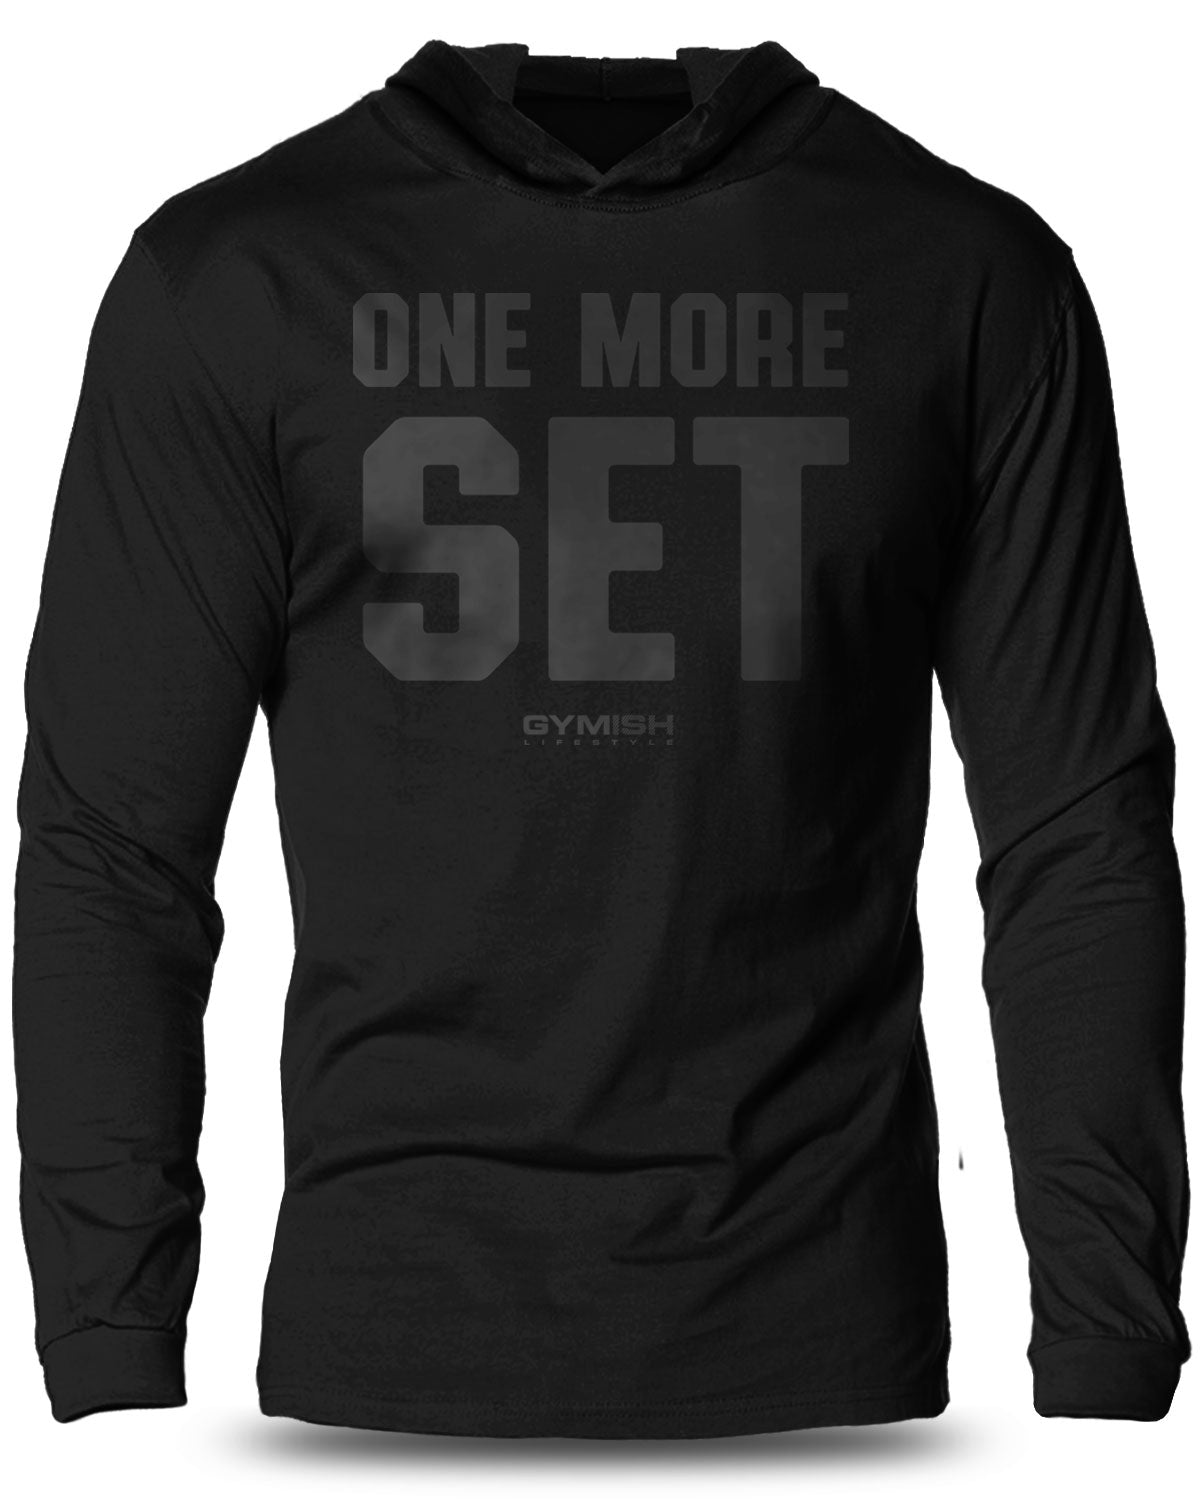 018-One More Set Lightweight Long Sleeve Hooded T-shirt for Men